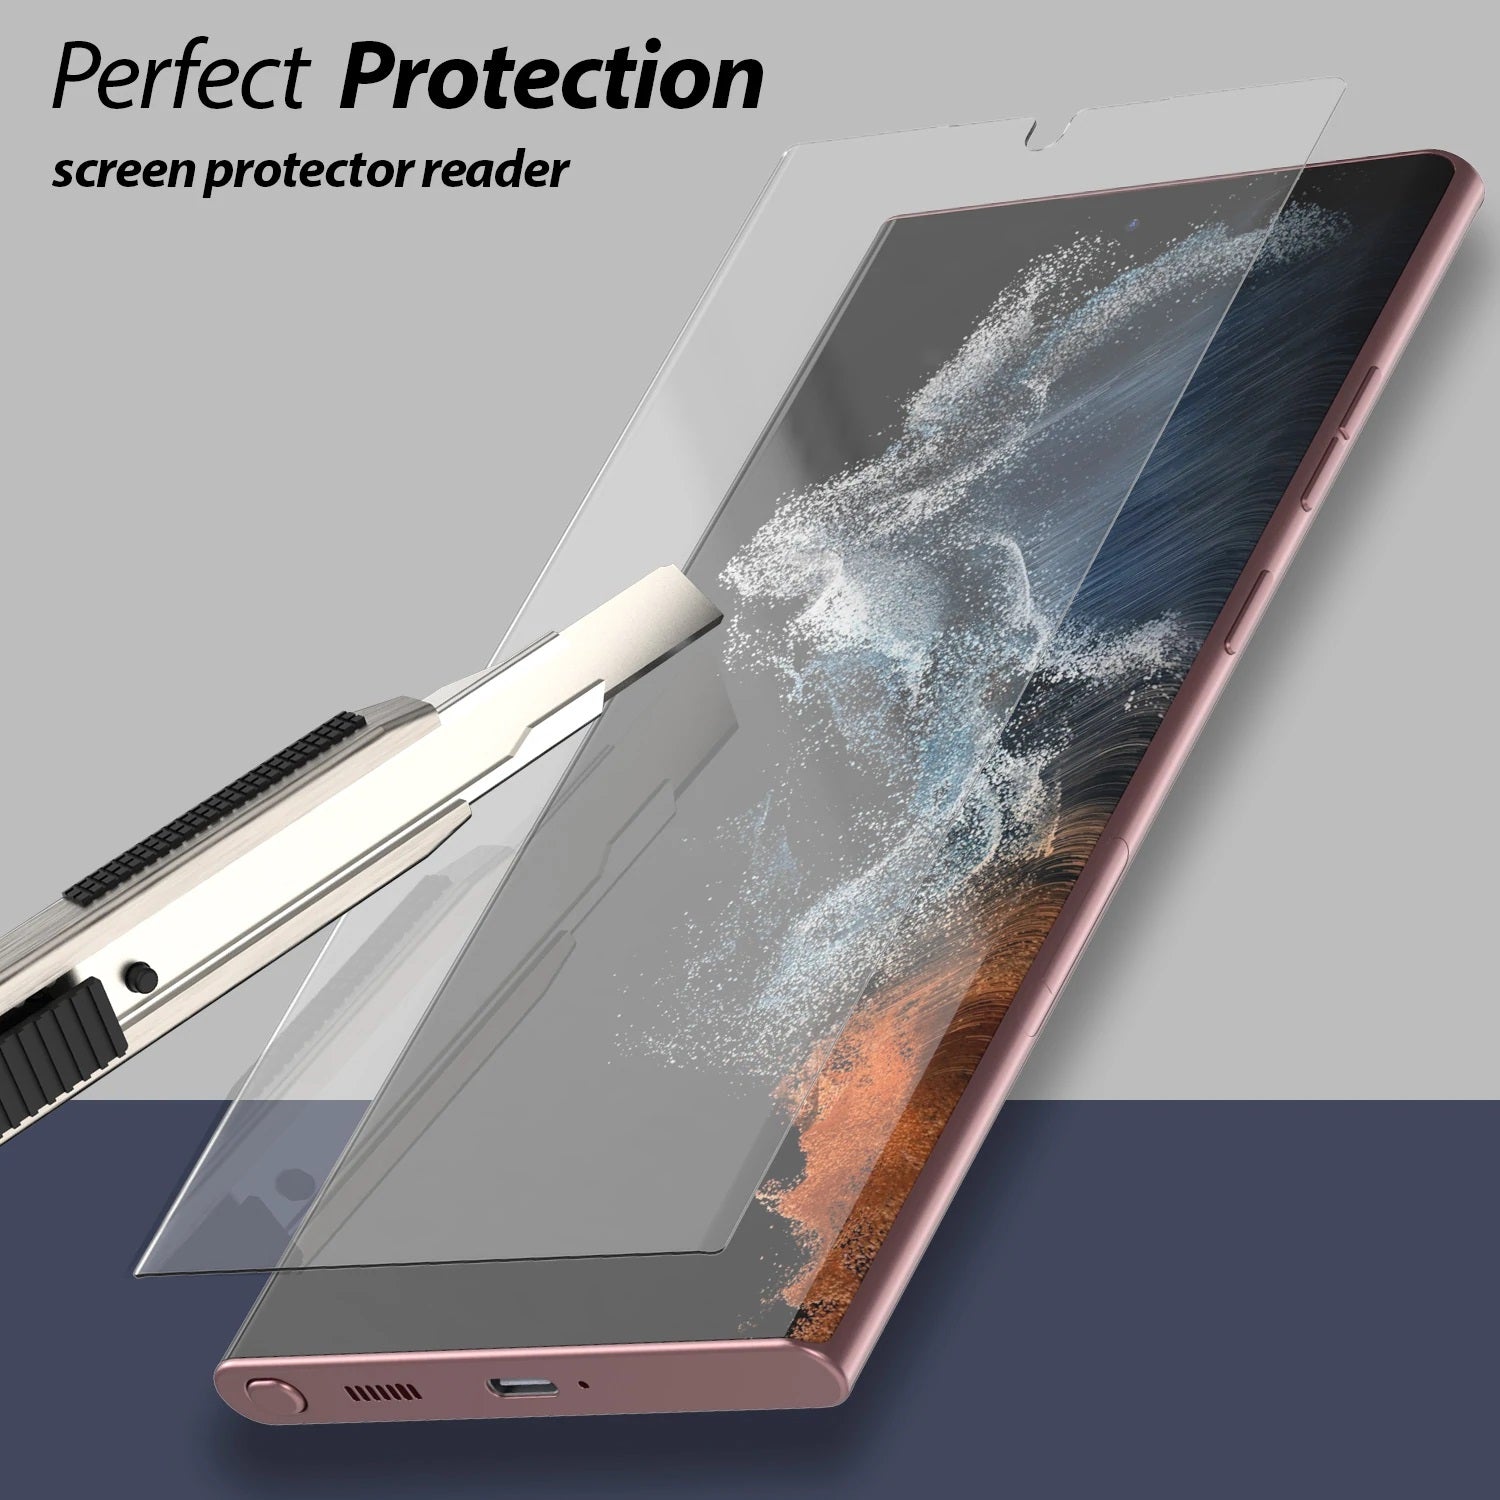 Dome Glass] Samsung Galaxy S23 Ultra Tempered Glass Screen Protector –  Whitestonedome